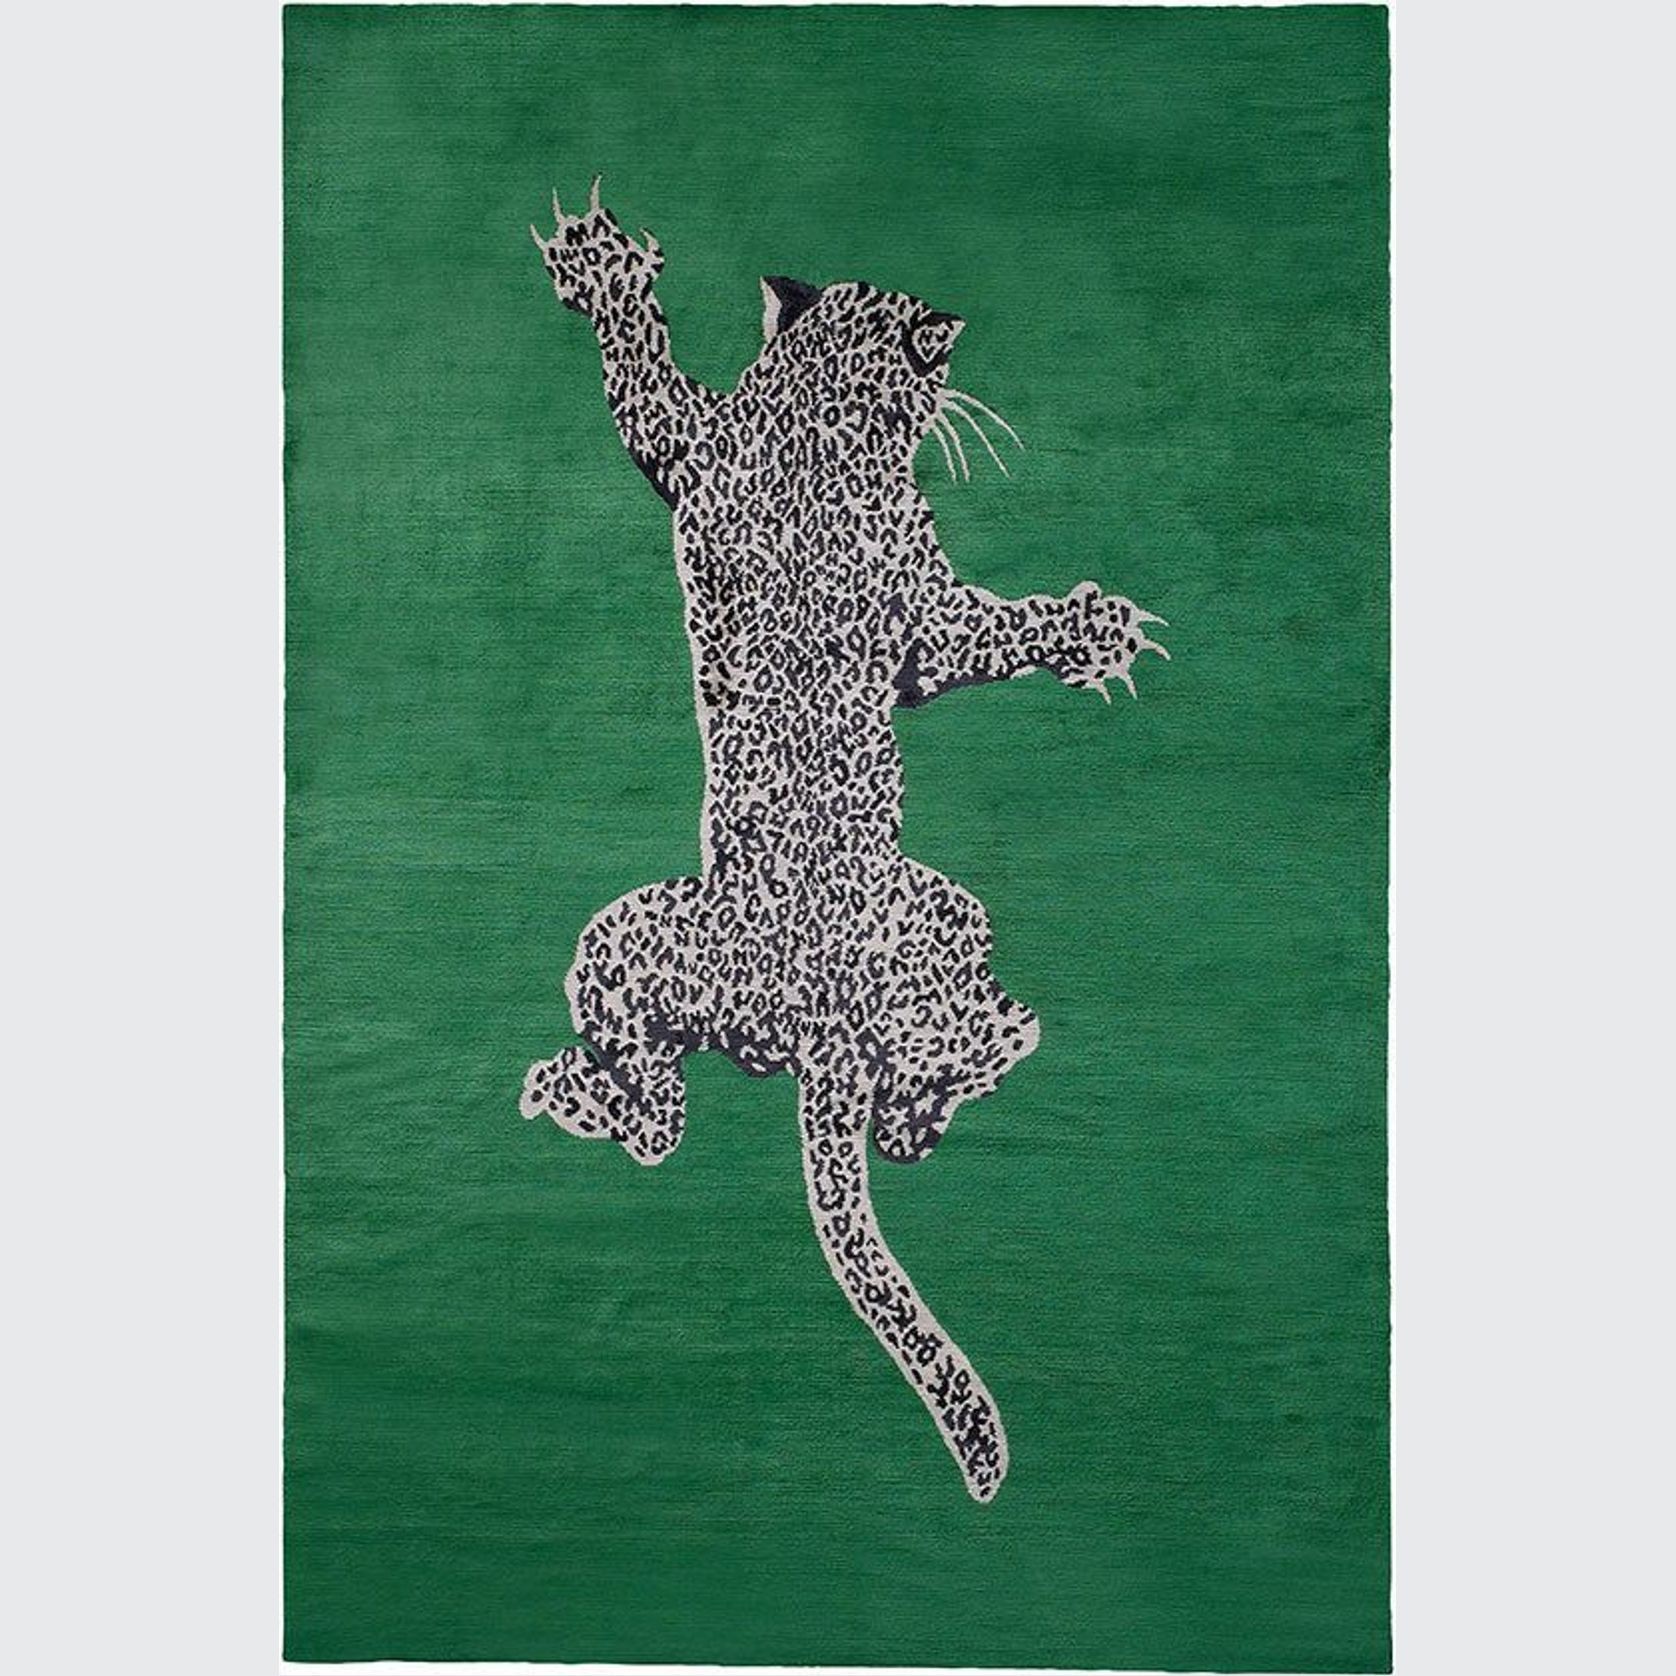 The Rug Company | Leopard by Diane Von Furstenberg gallery detail image